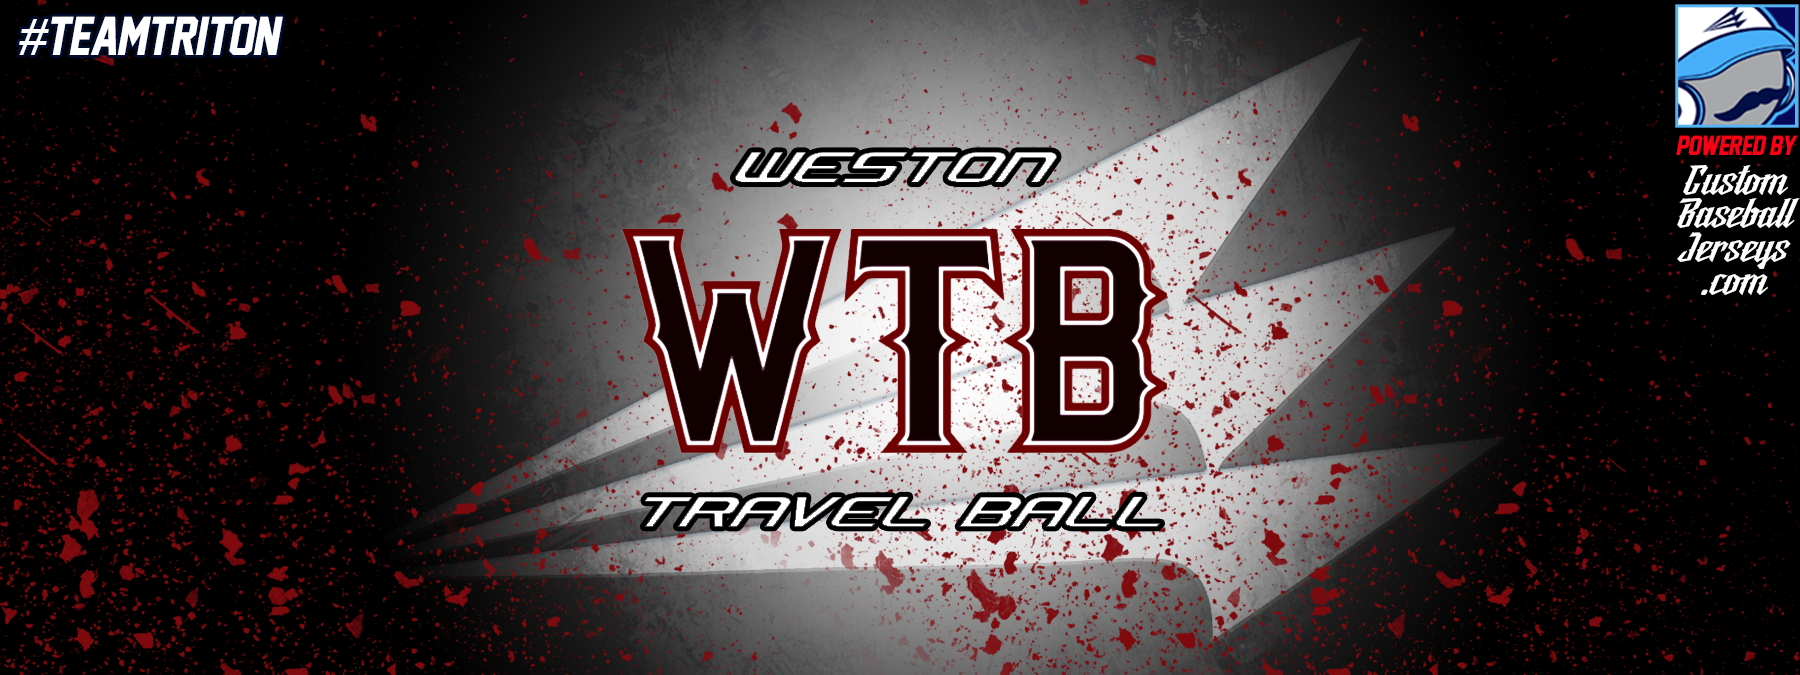 weston travel baseball